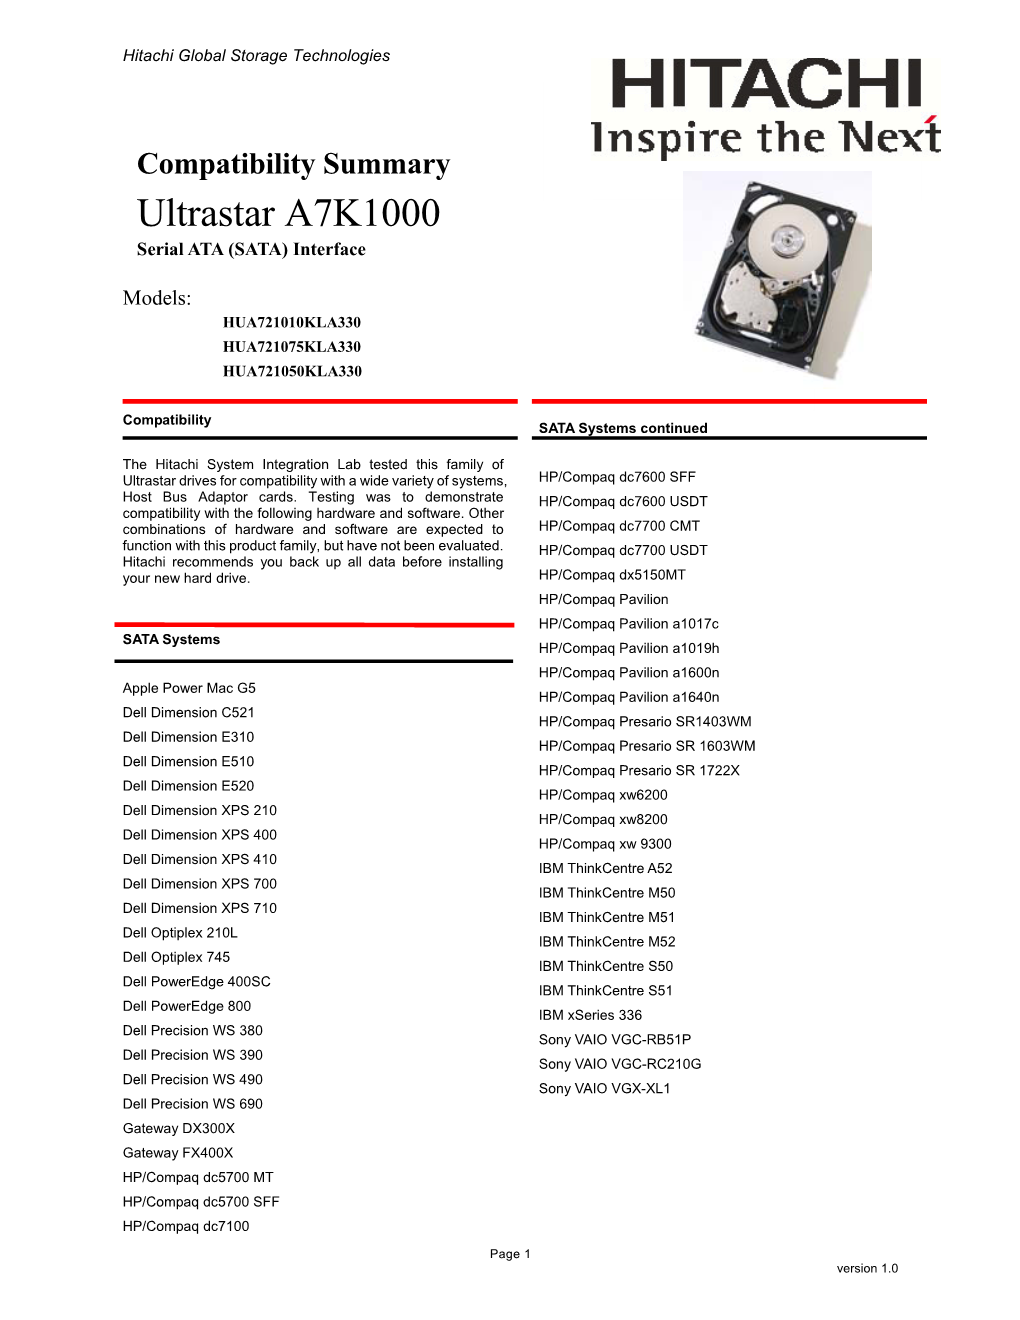 Ultrastar A7K1000 Serial ATA (SATA) Interface